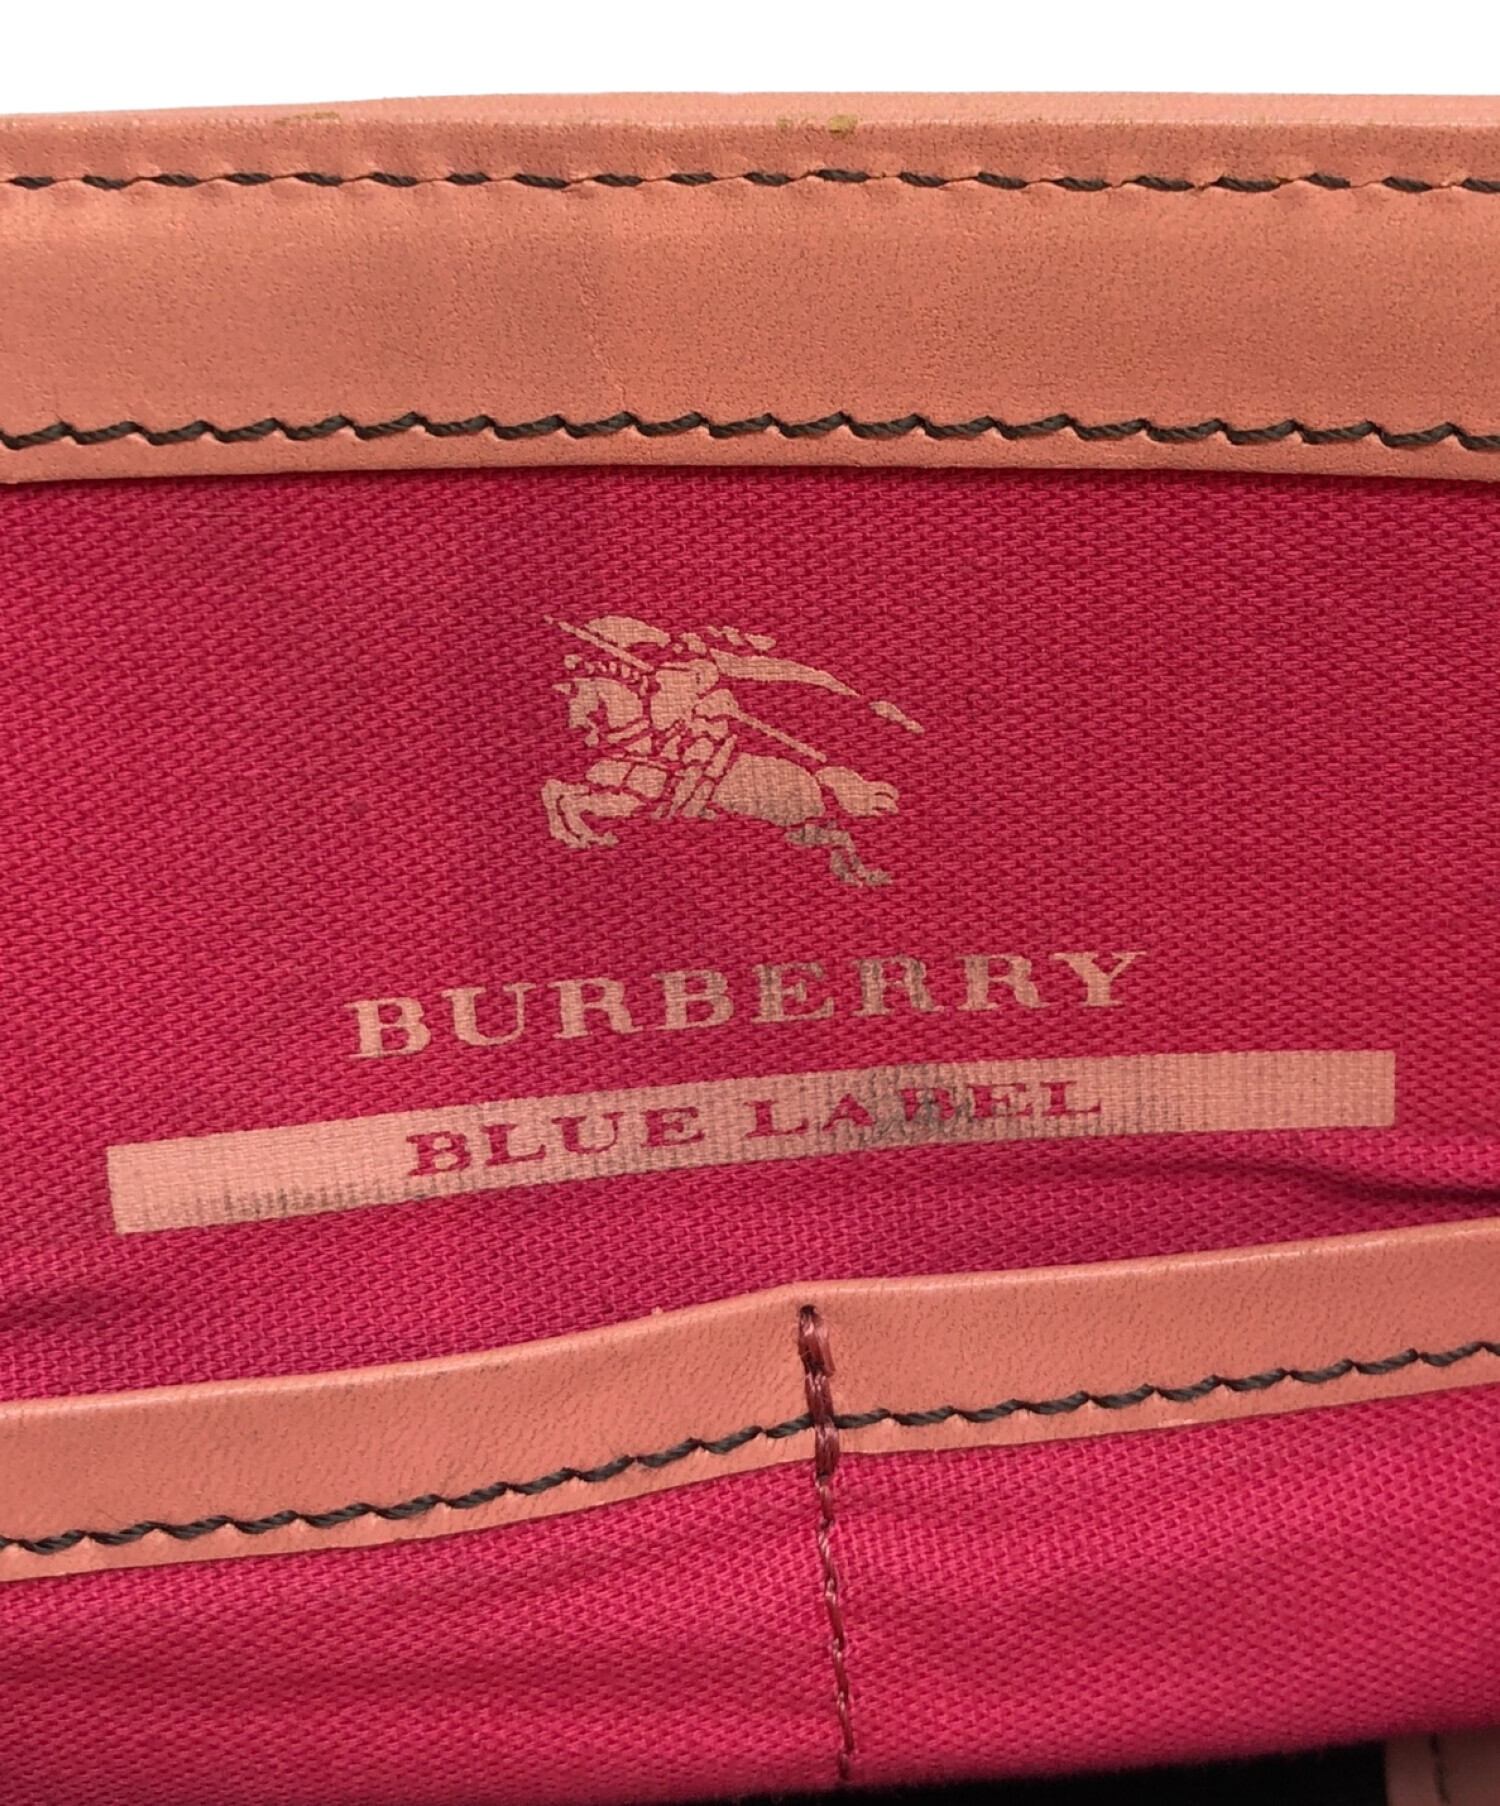 BURBERRY BLUE LABEL (バーバリーブルーレーベル) キャンバスハンドバッグ ブラック×ピンク